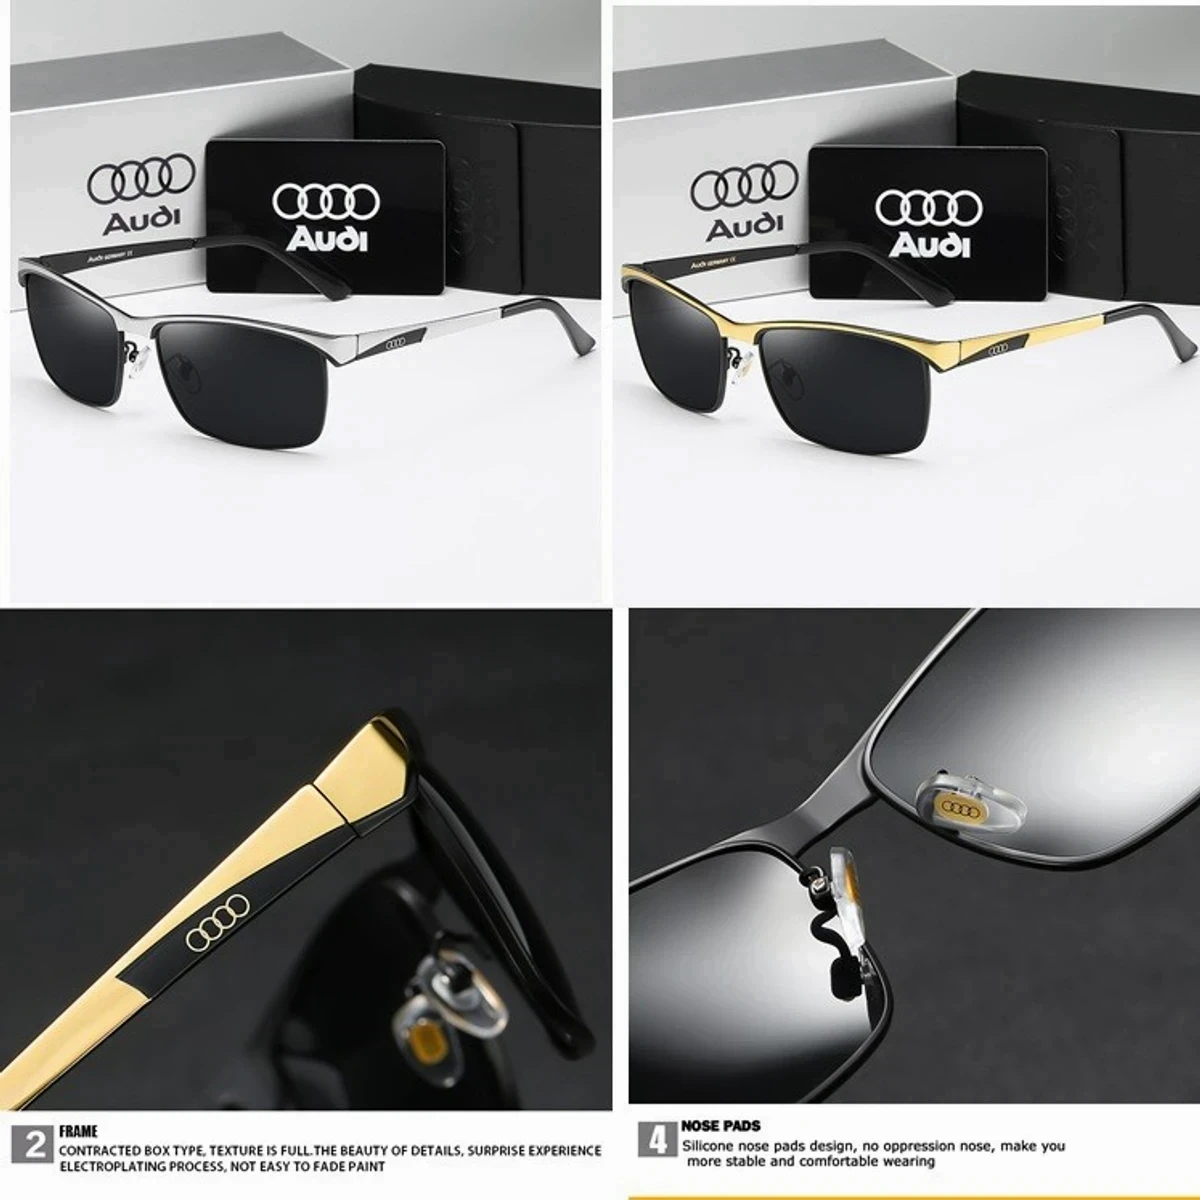 New Audi Polarized Sunglasses